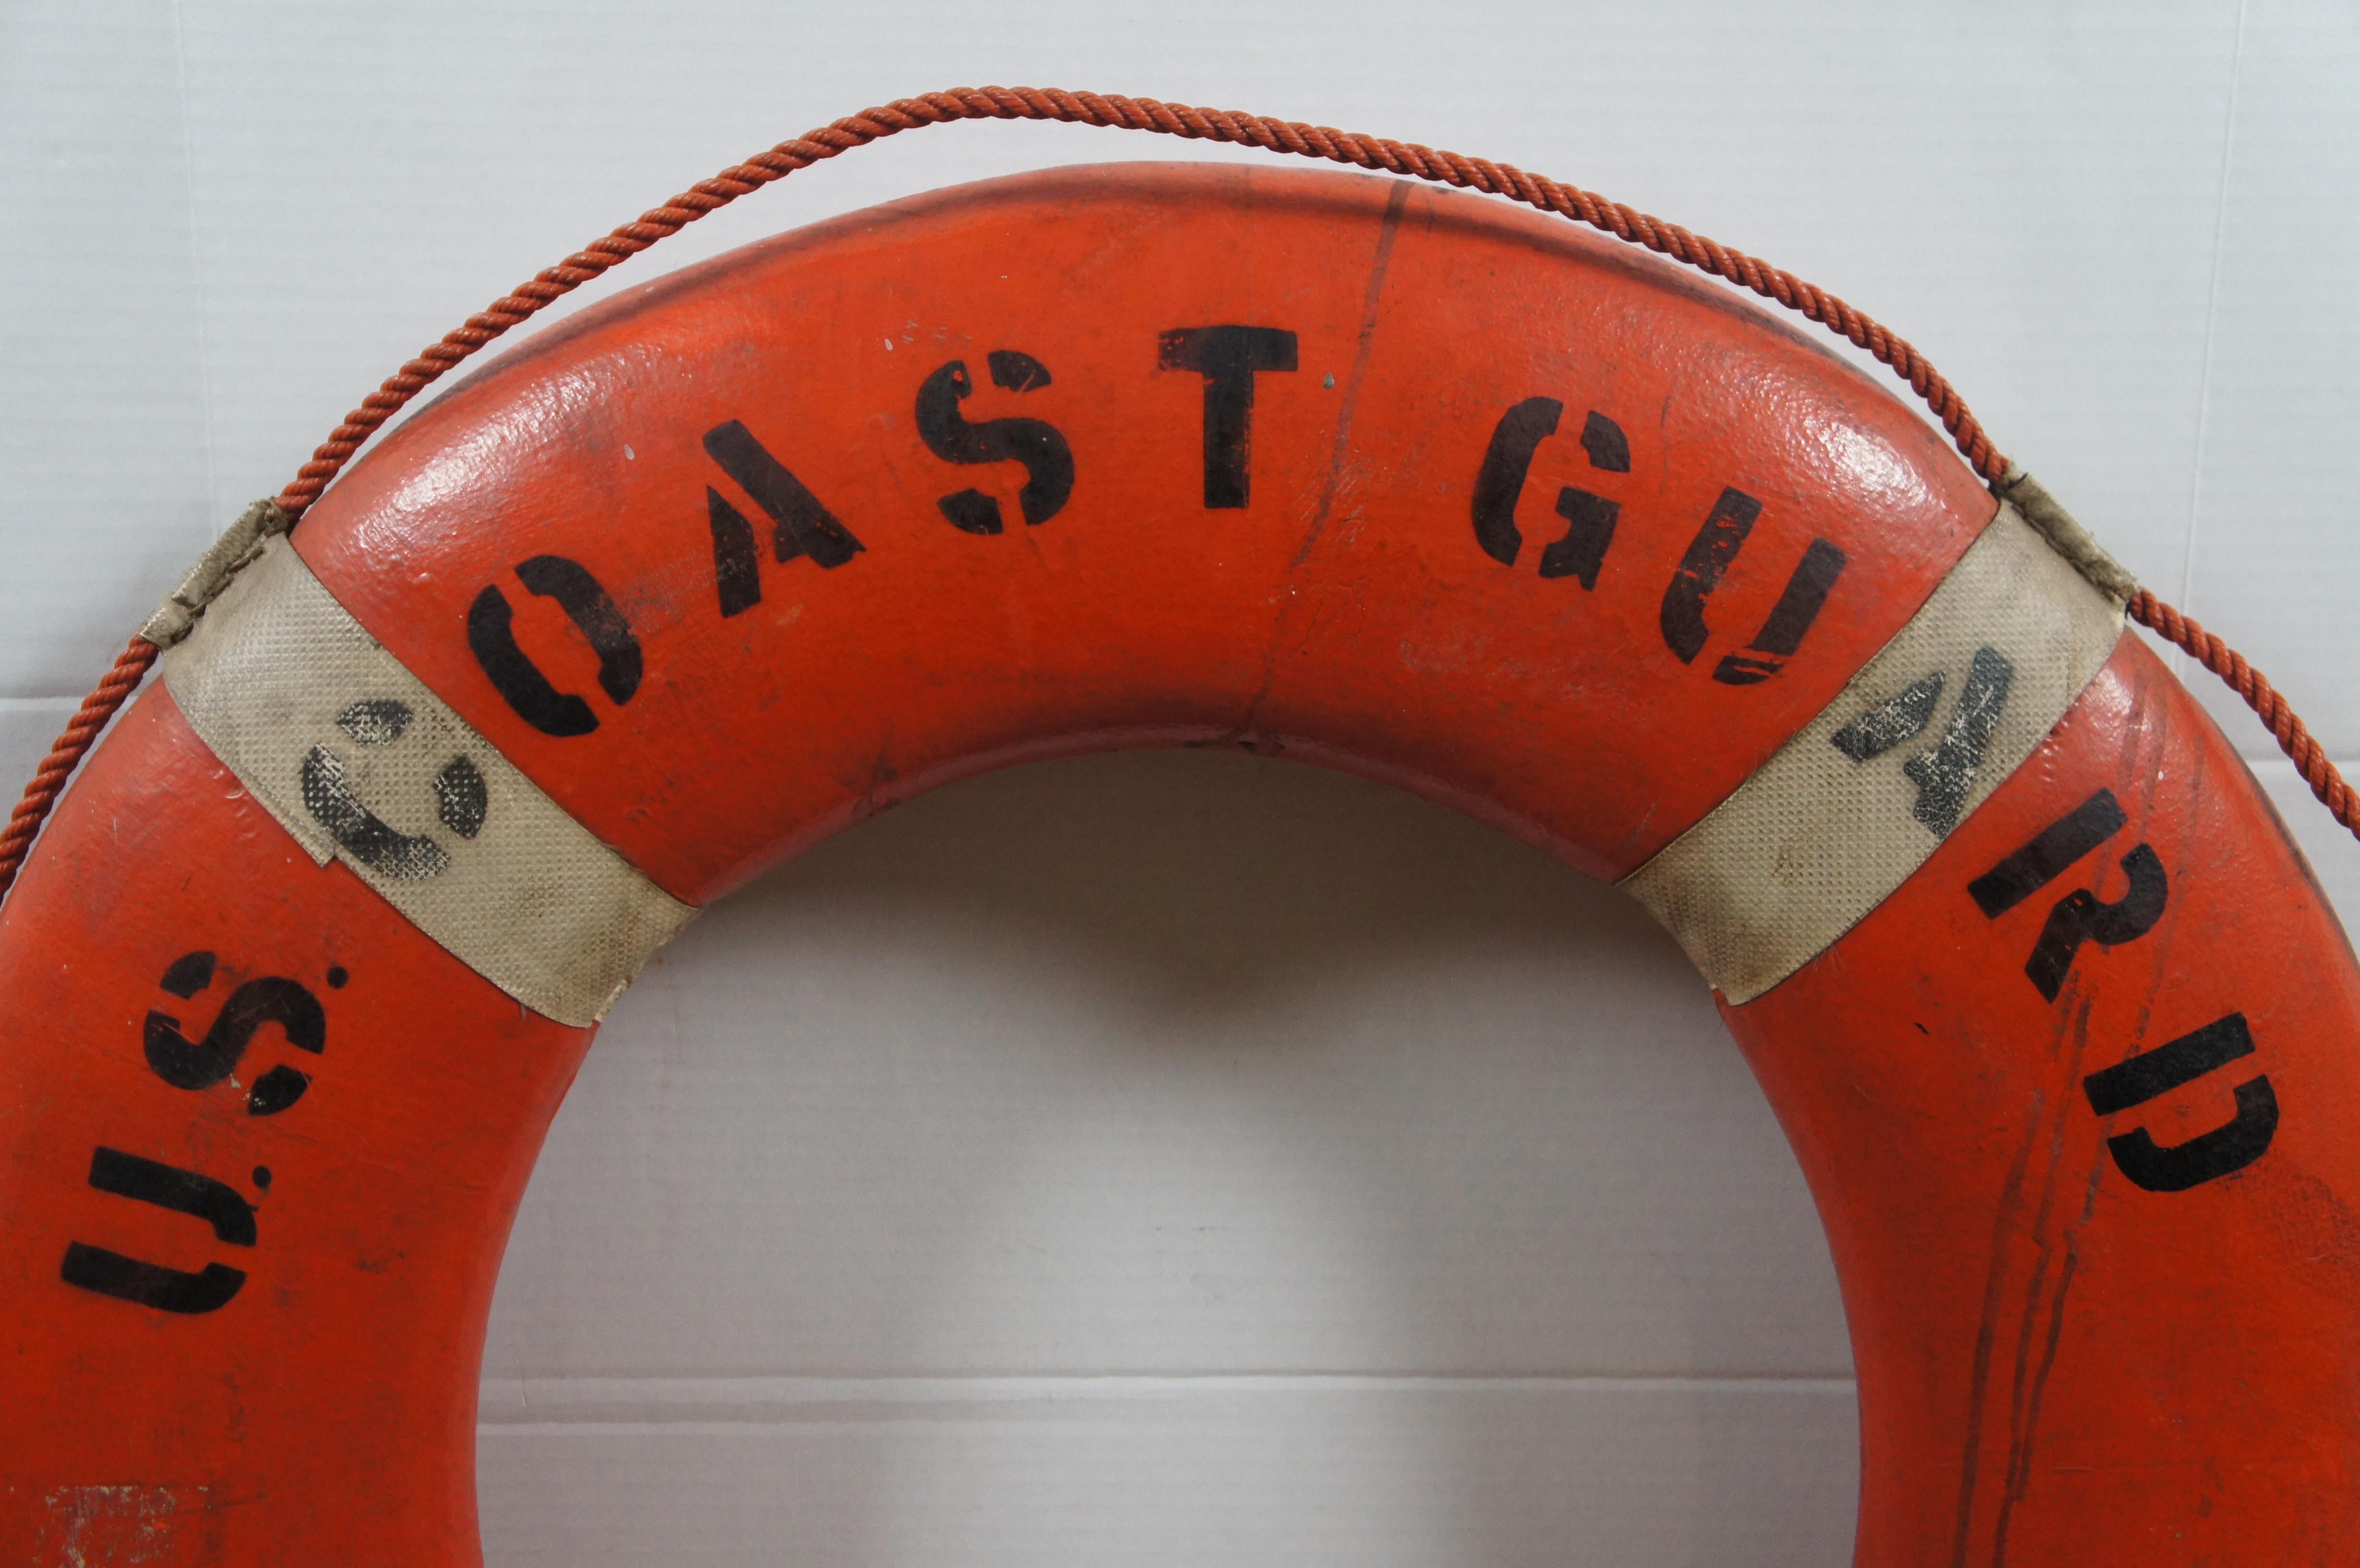 US Coast Guard Manitou Hafen Kutter Orange Schlepper Rettungsring 30